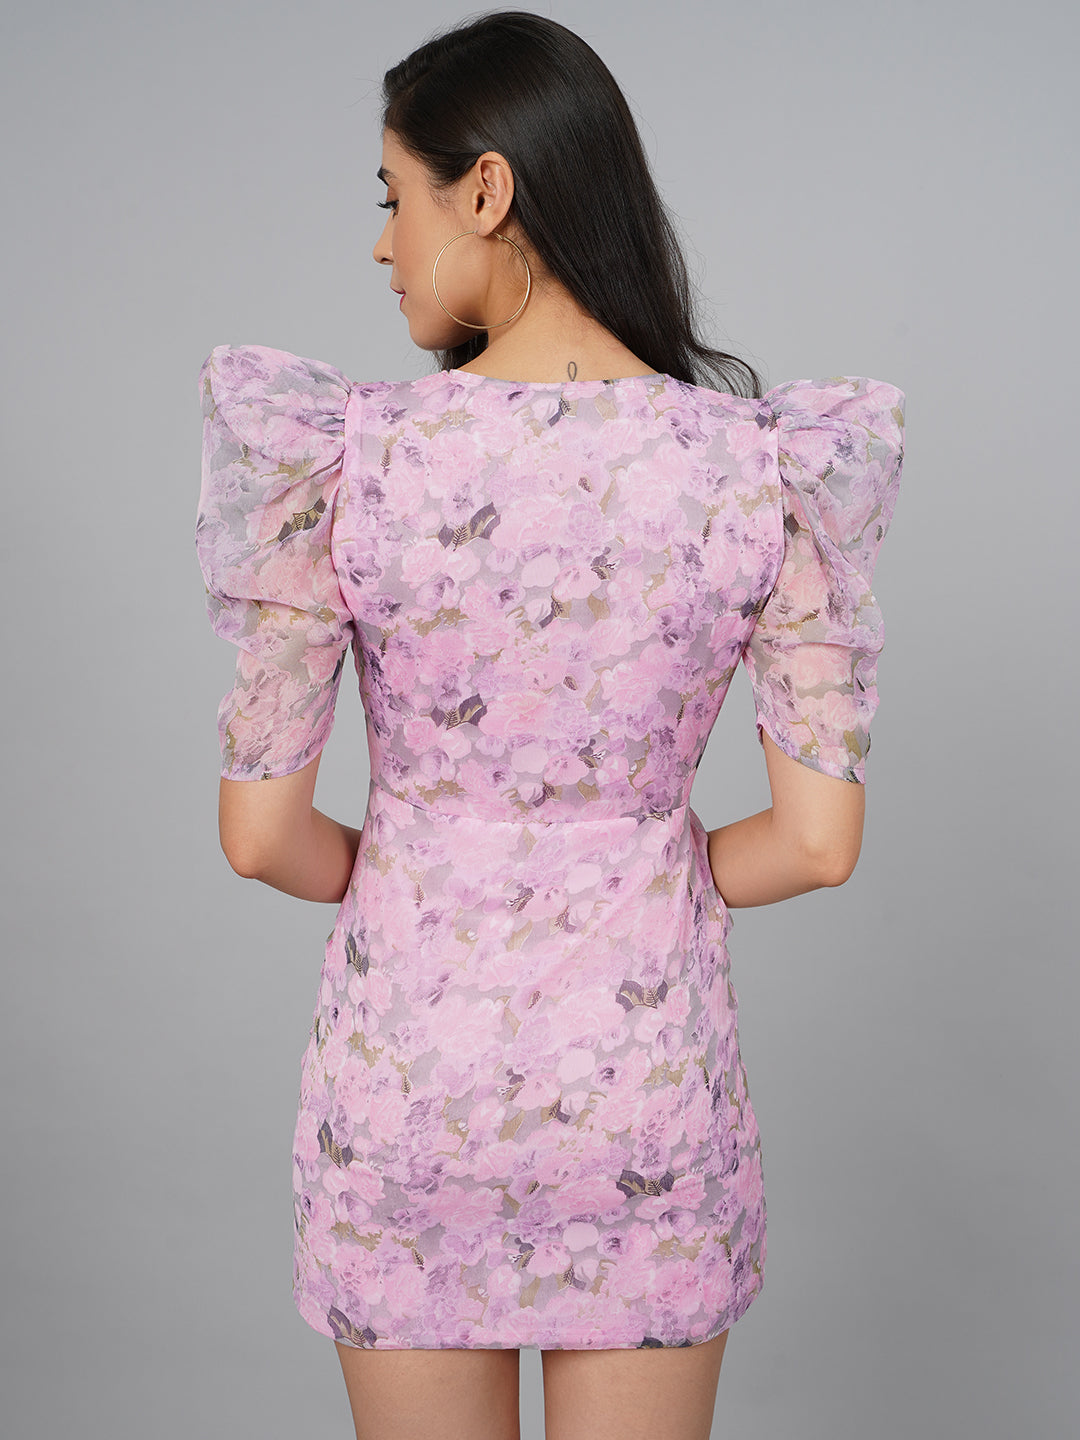 SCORPIUS Purple Floral Dress